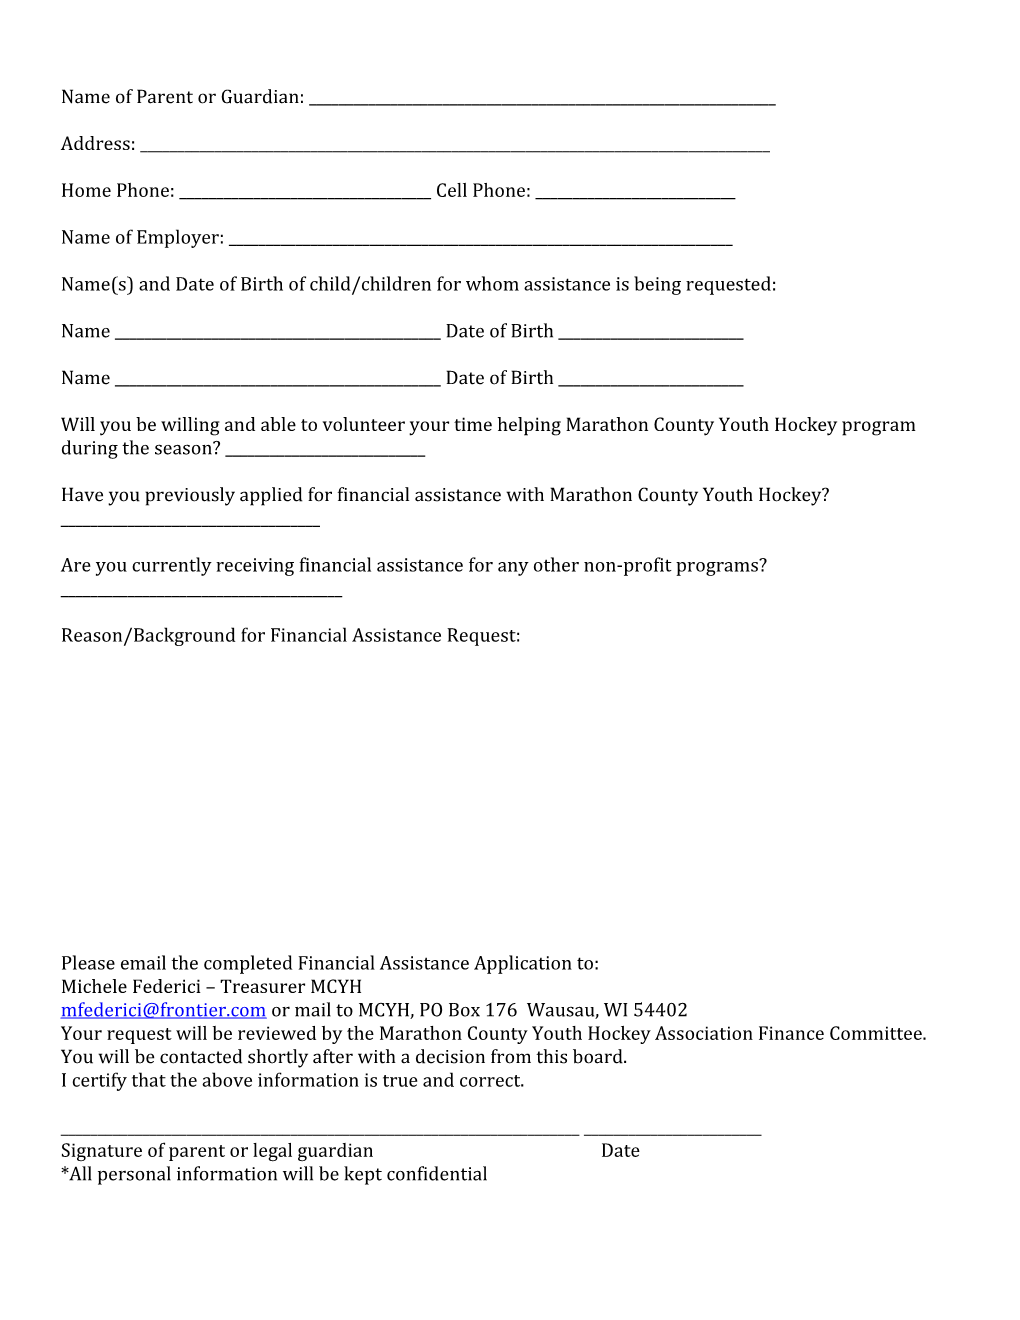 MCYH Financial Assistance Form (W150357;1)